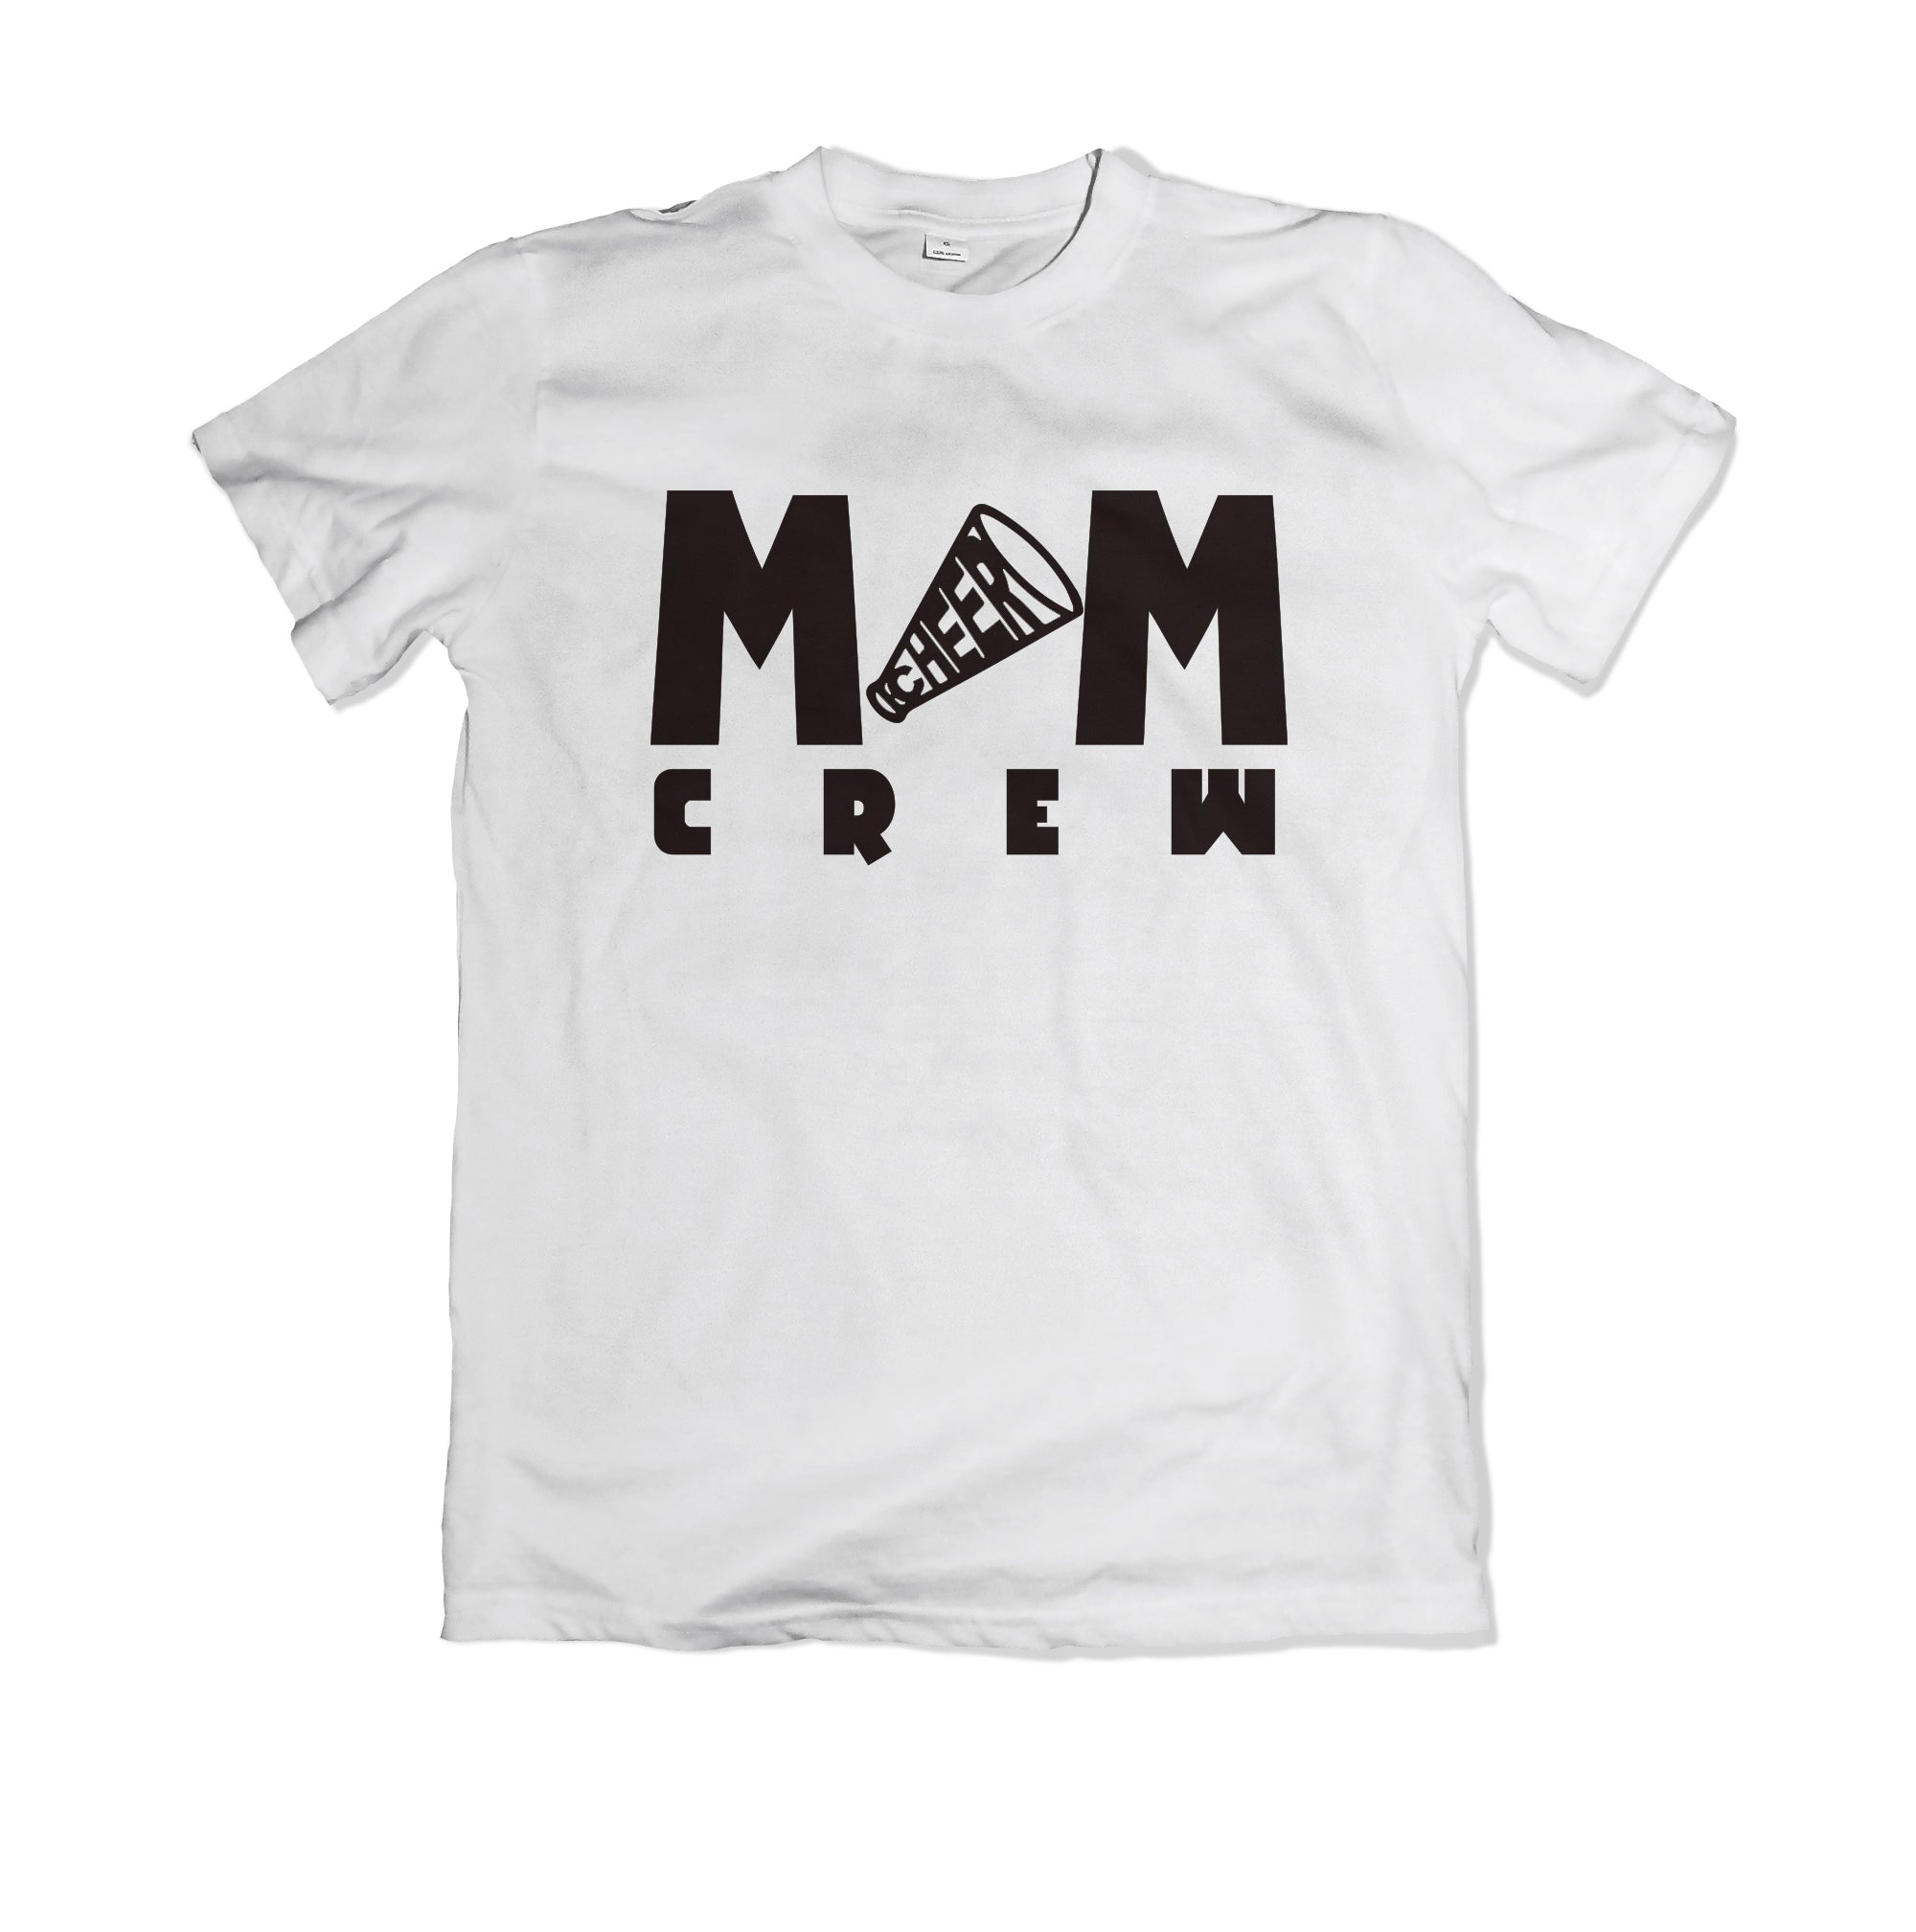 Cheer Mom T-Shirt - TOPS, TSS CUSTOM GRPHX, SNEAKER STUDIO, GOLDEN GILT, DESIGN BY TSS